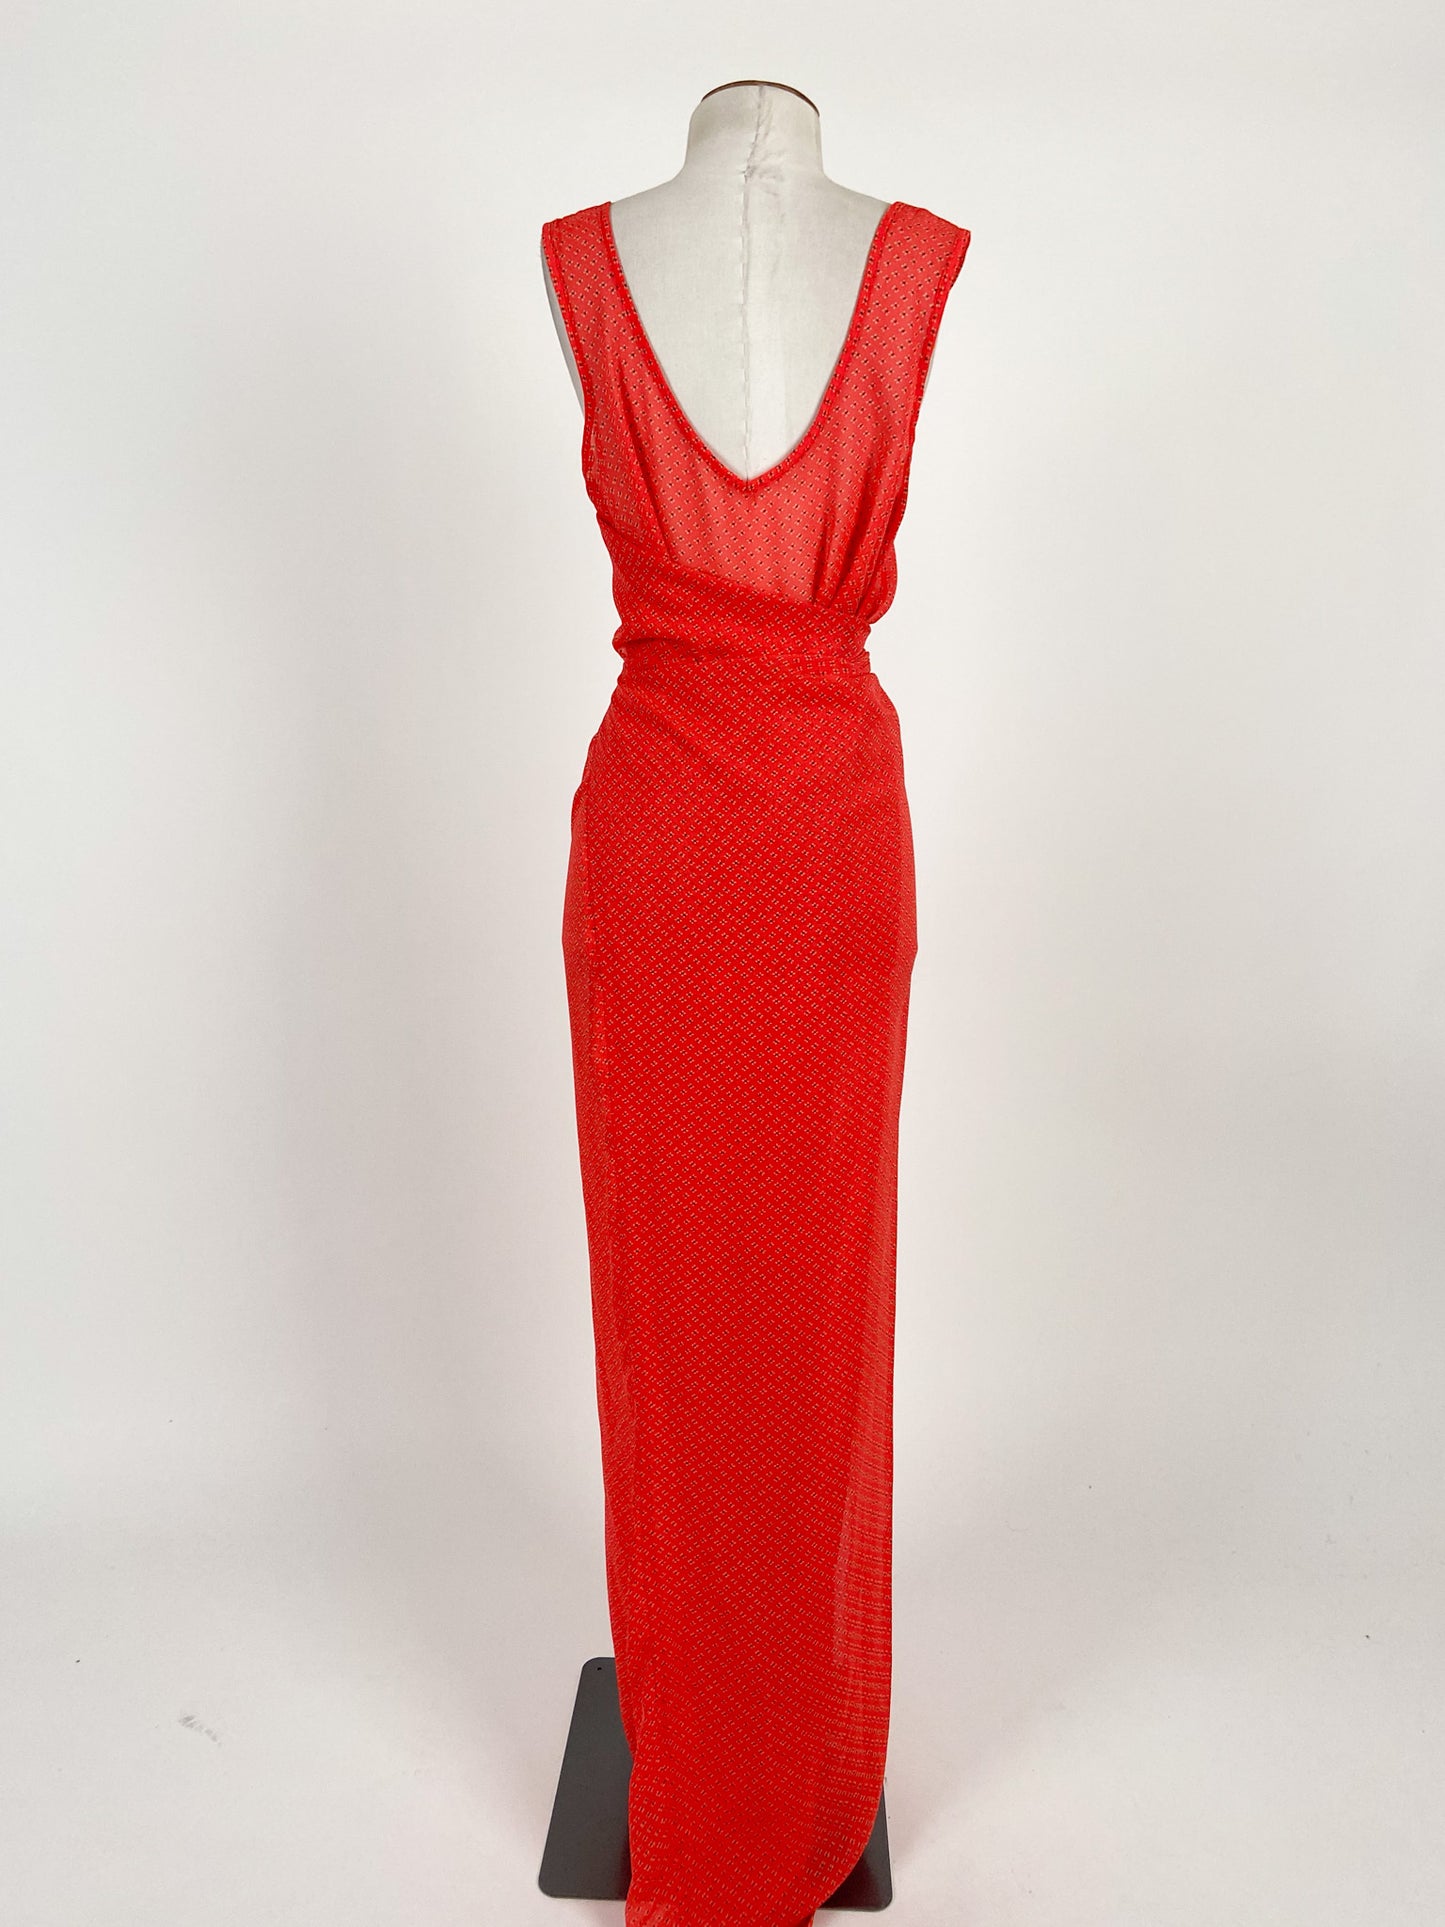 KILT | Red Formal Dress | Size S/M